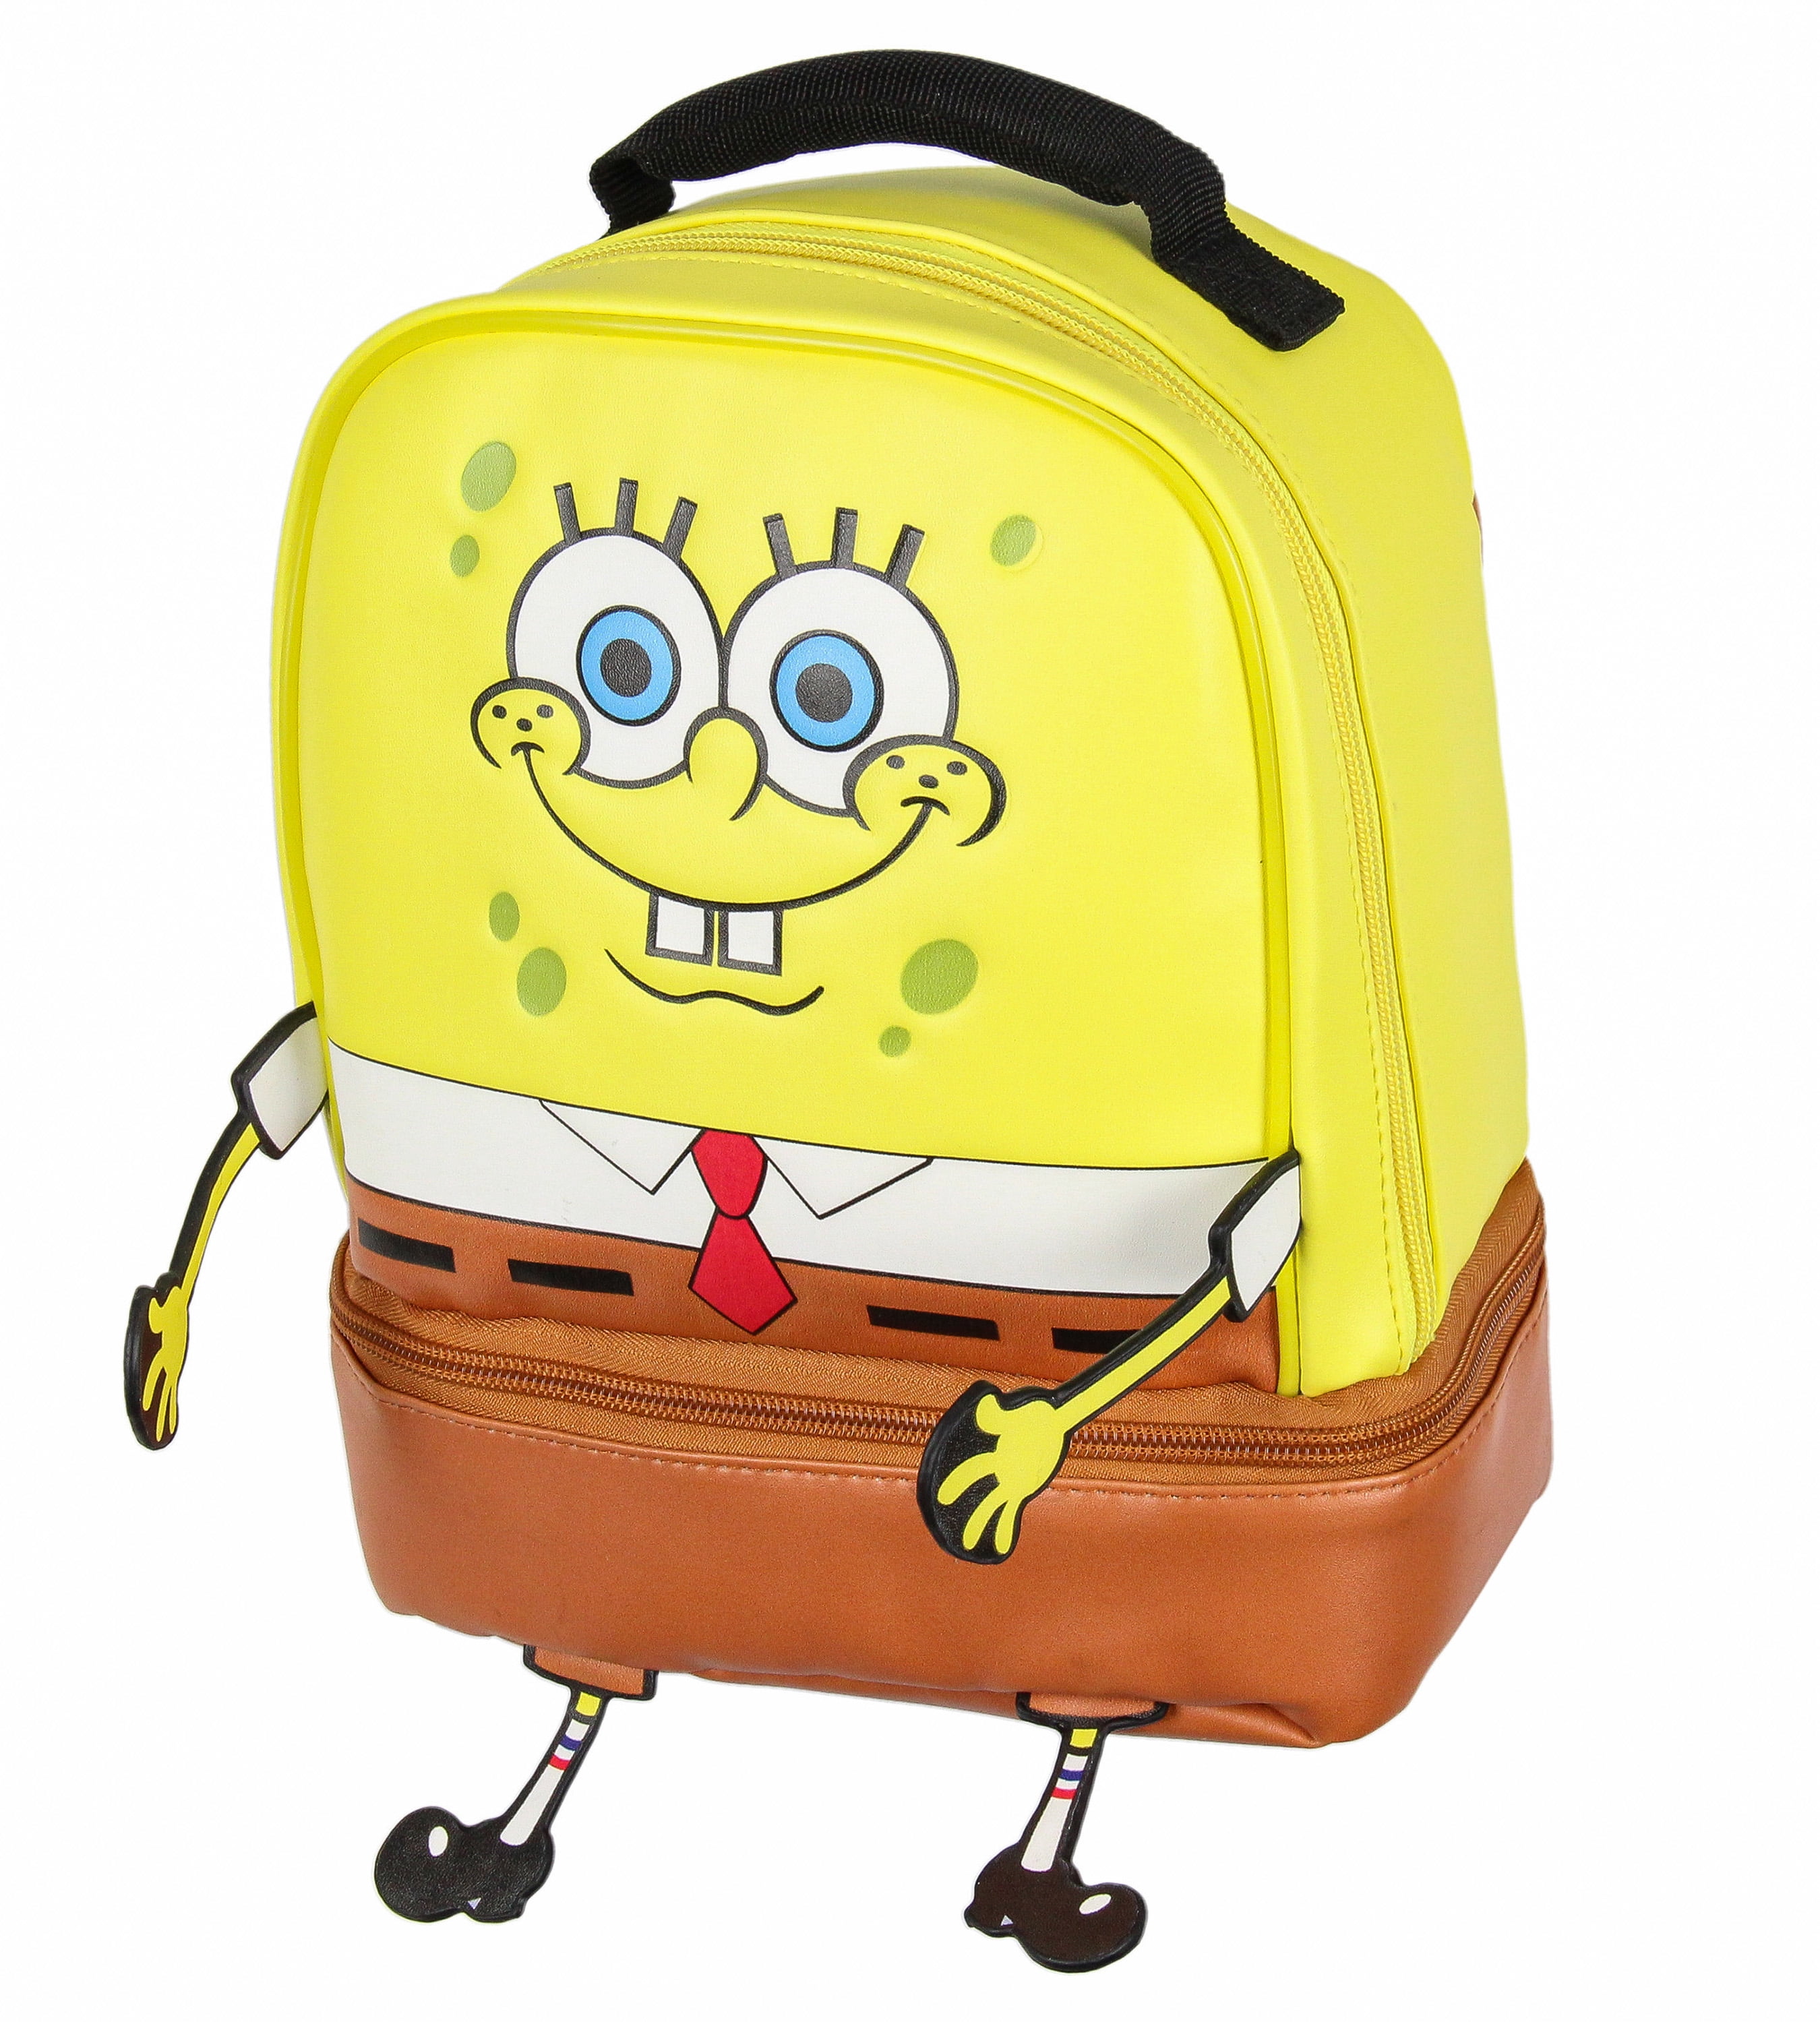 SpongeBob SquarePants Big Face Metal Lunchbox